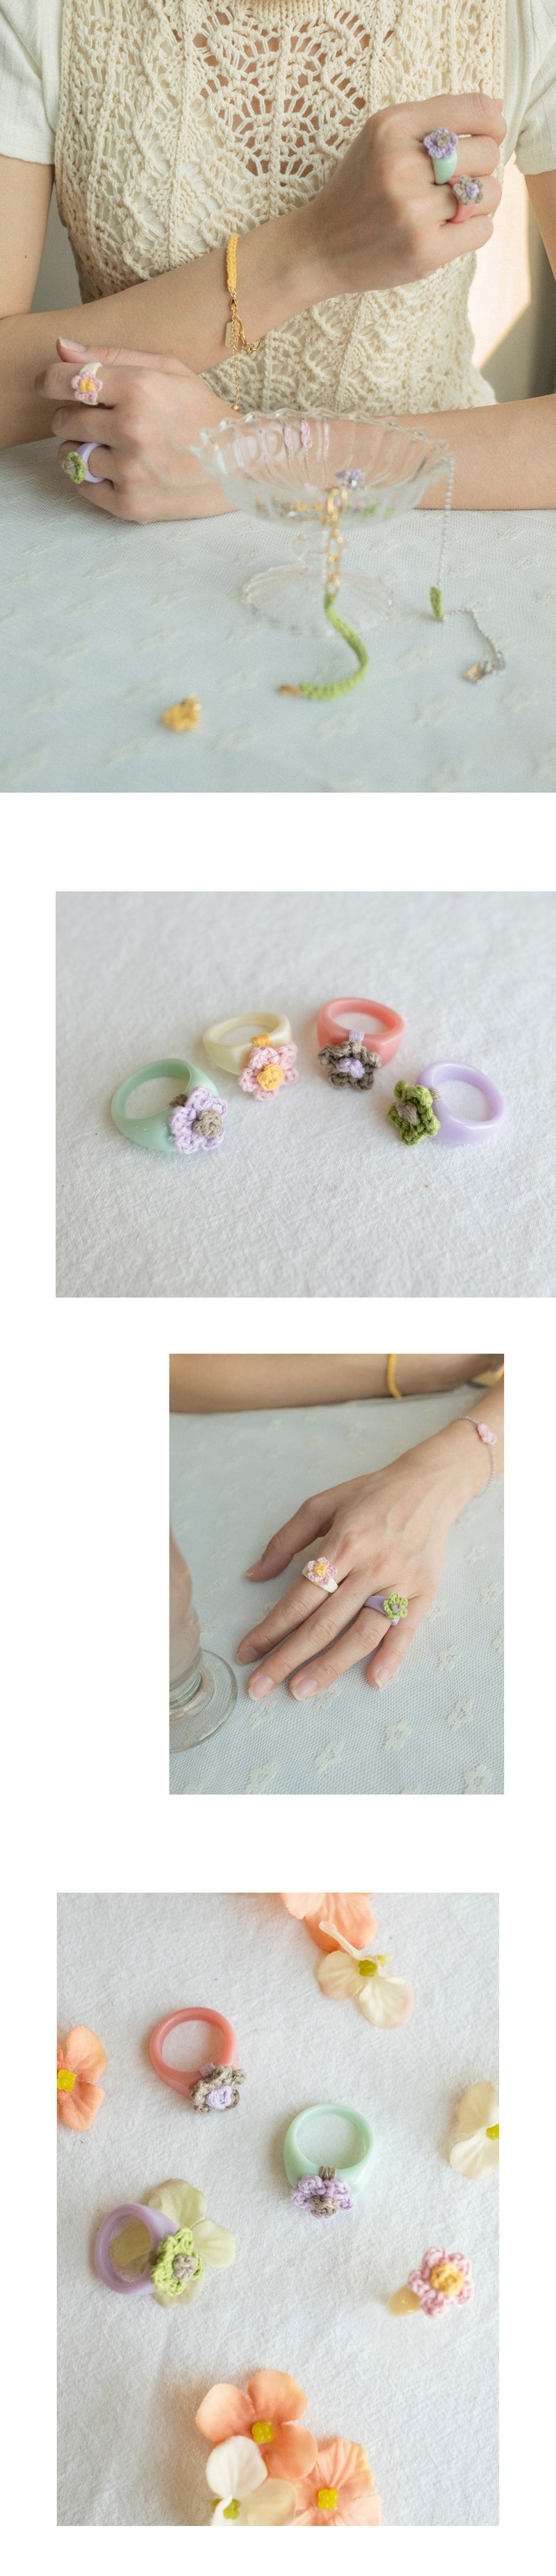 Pastel flower acrylic ring (6595725033590)